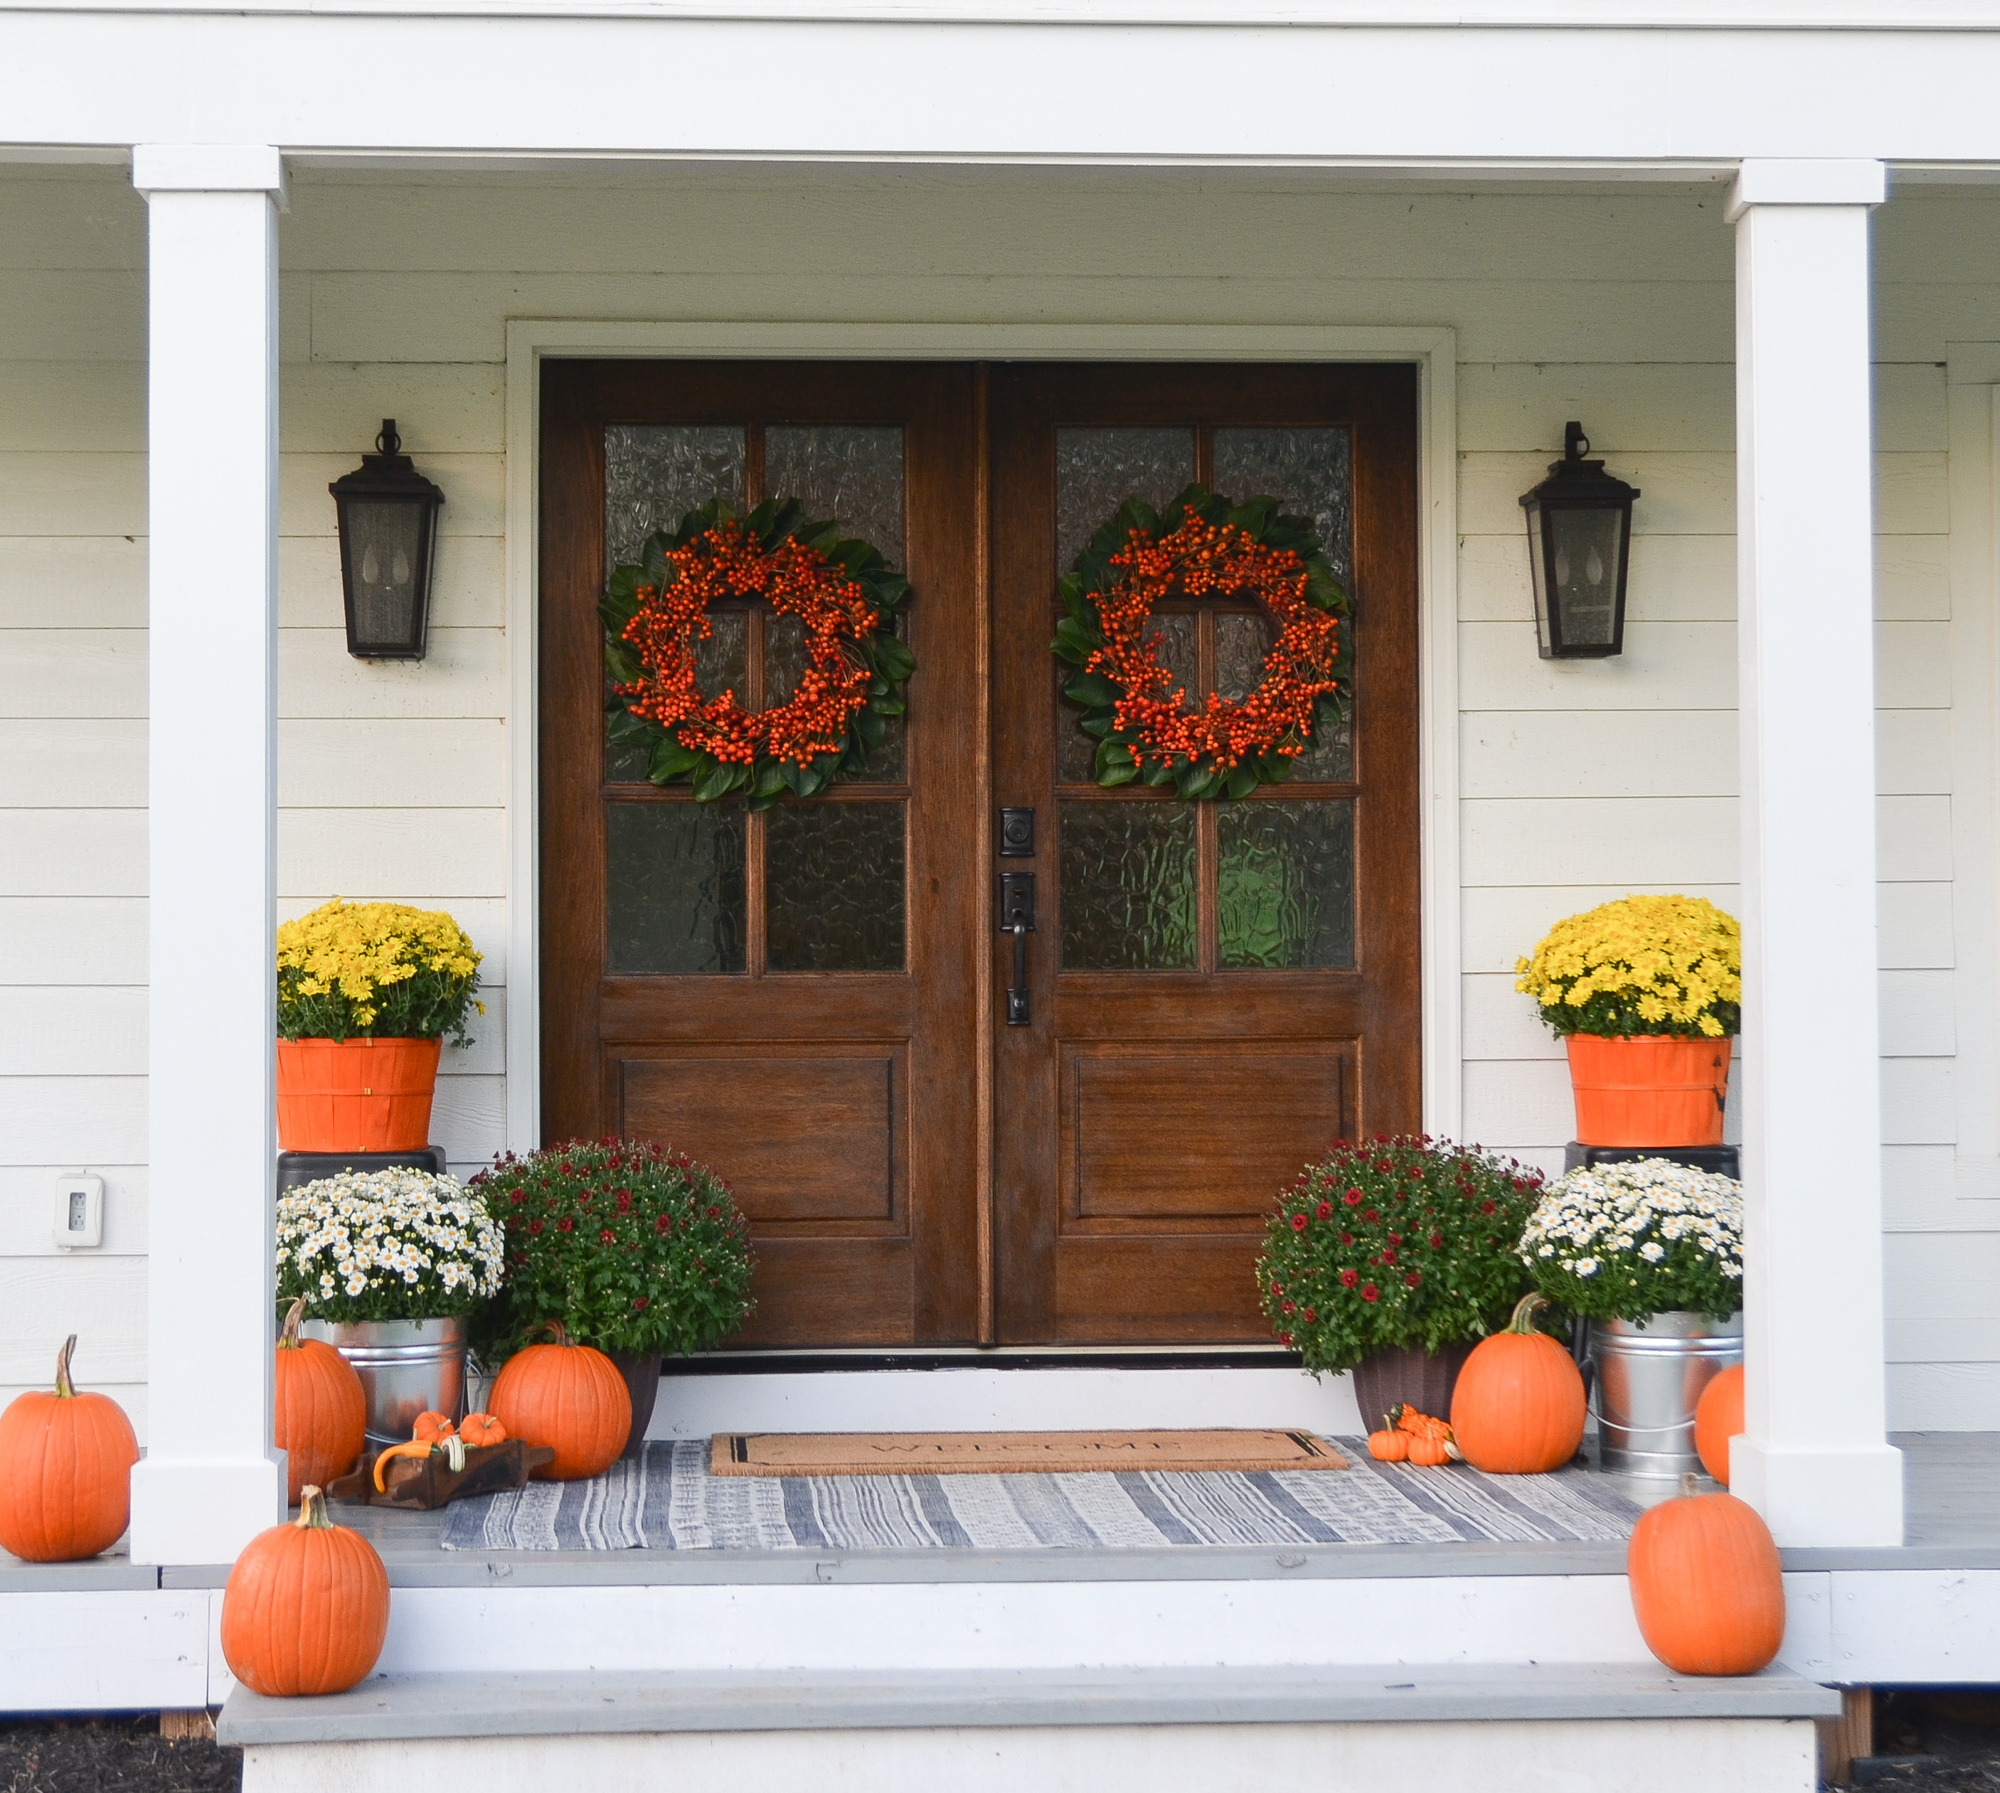 https://www.homestoriesatoz.com/wp-content/uploads/2019/09/20-DIY-Fall-Wreath-Ideas-Fall-Farmhouse-Porch-by-Beneath-My-Heart-1.jpg